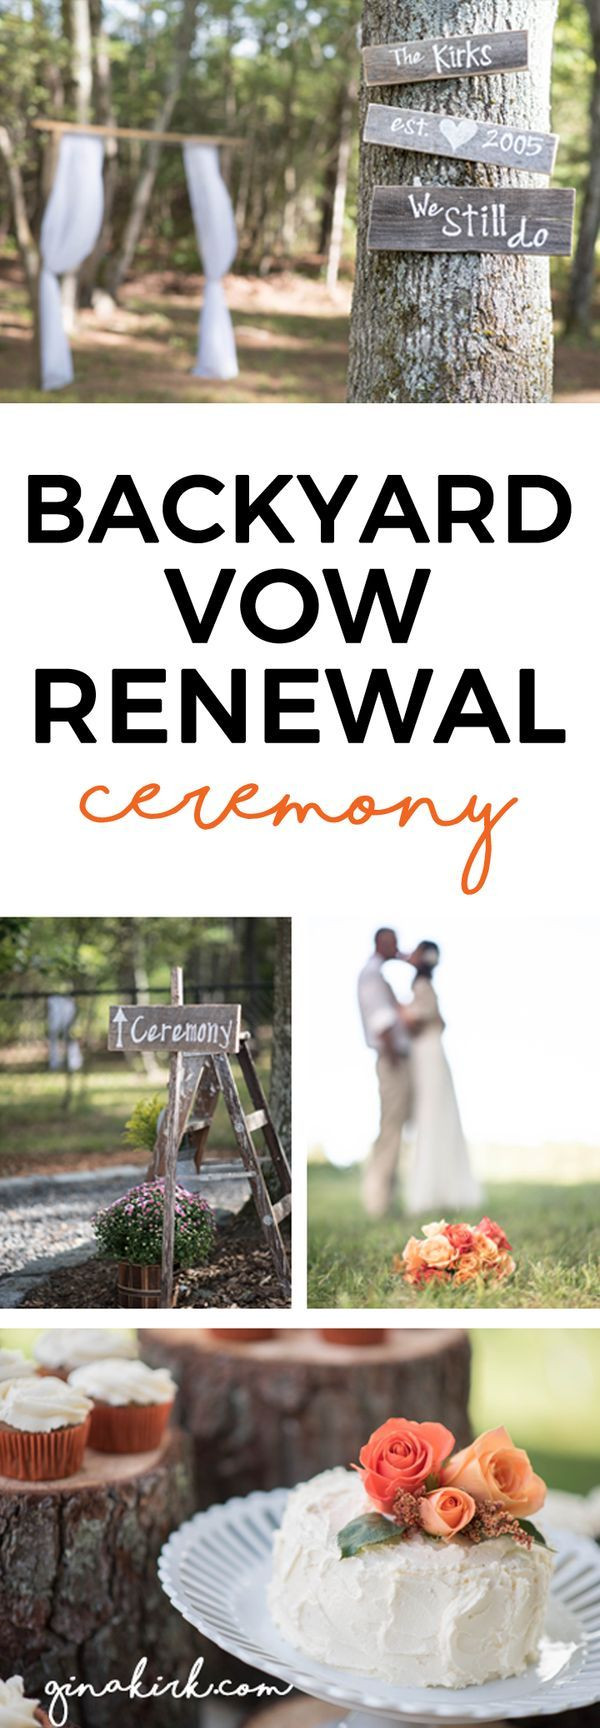 Renew Wedding Vows Ideas
 Celebrating 10 Years Our Backyard Vow Renewal